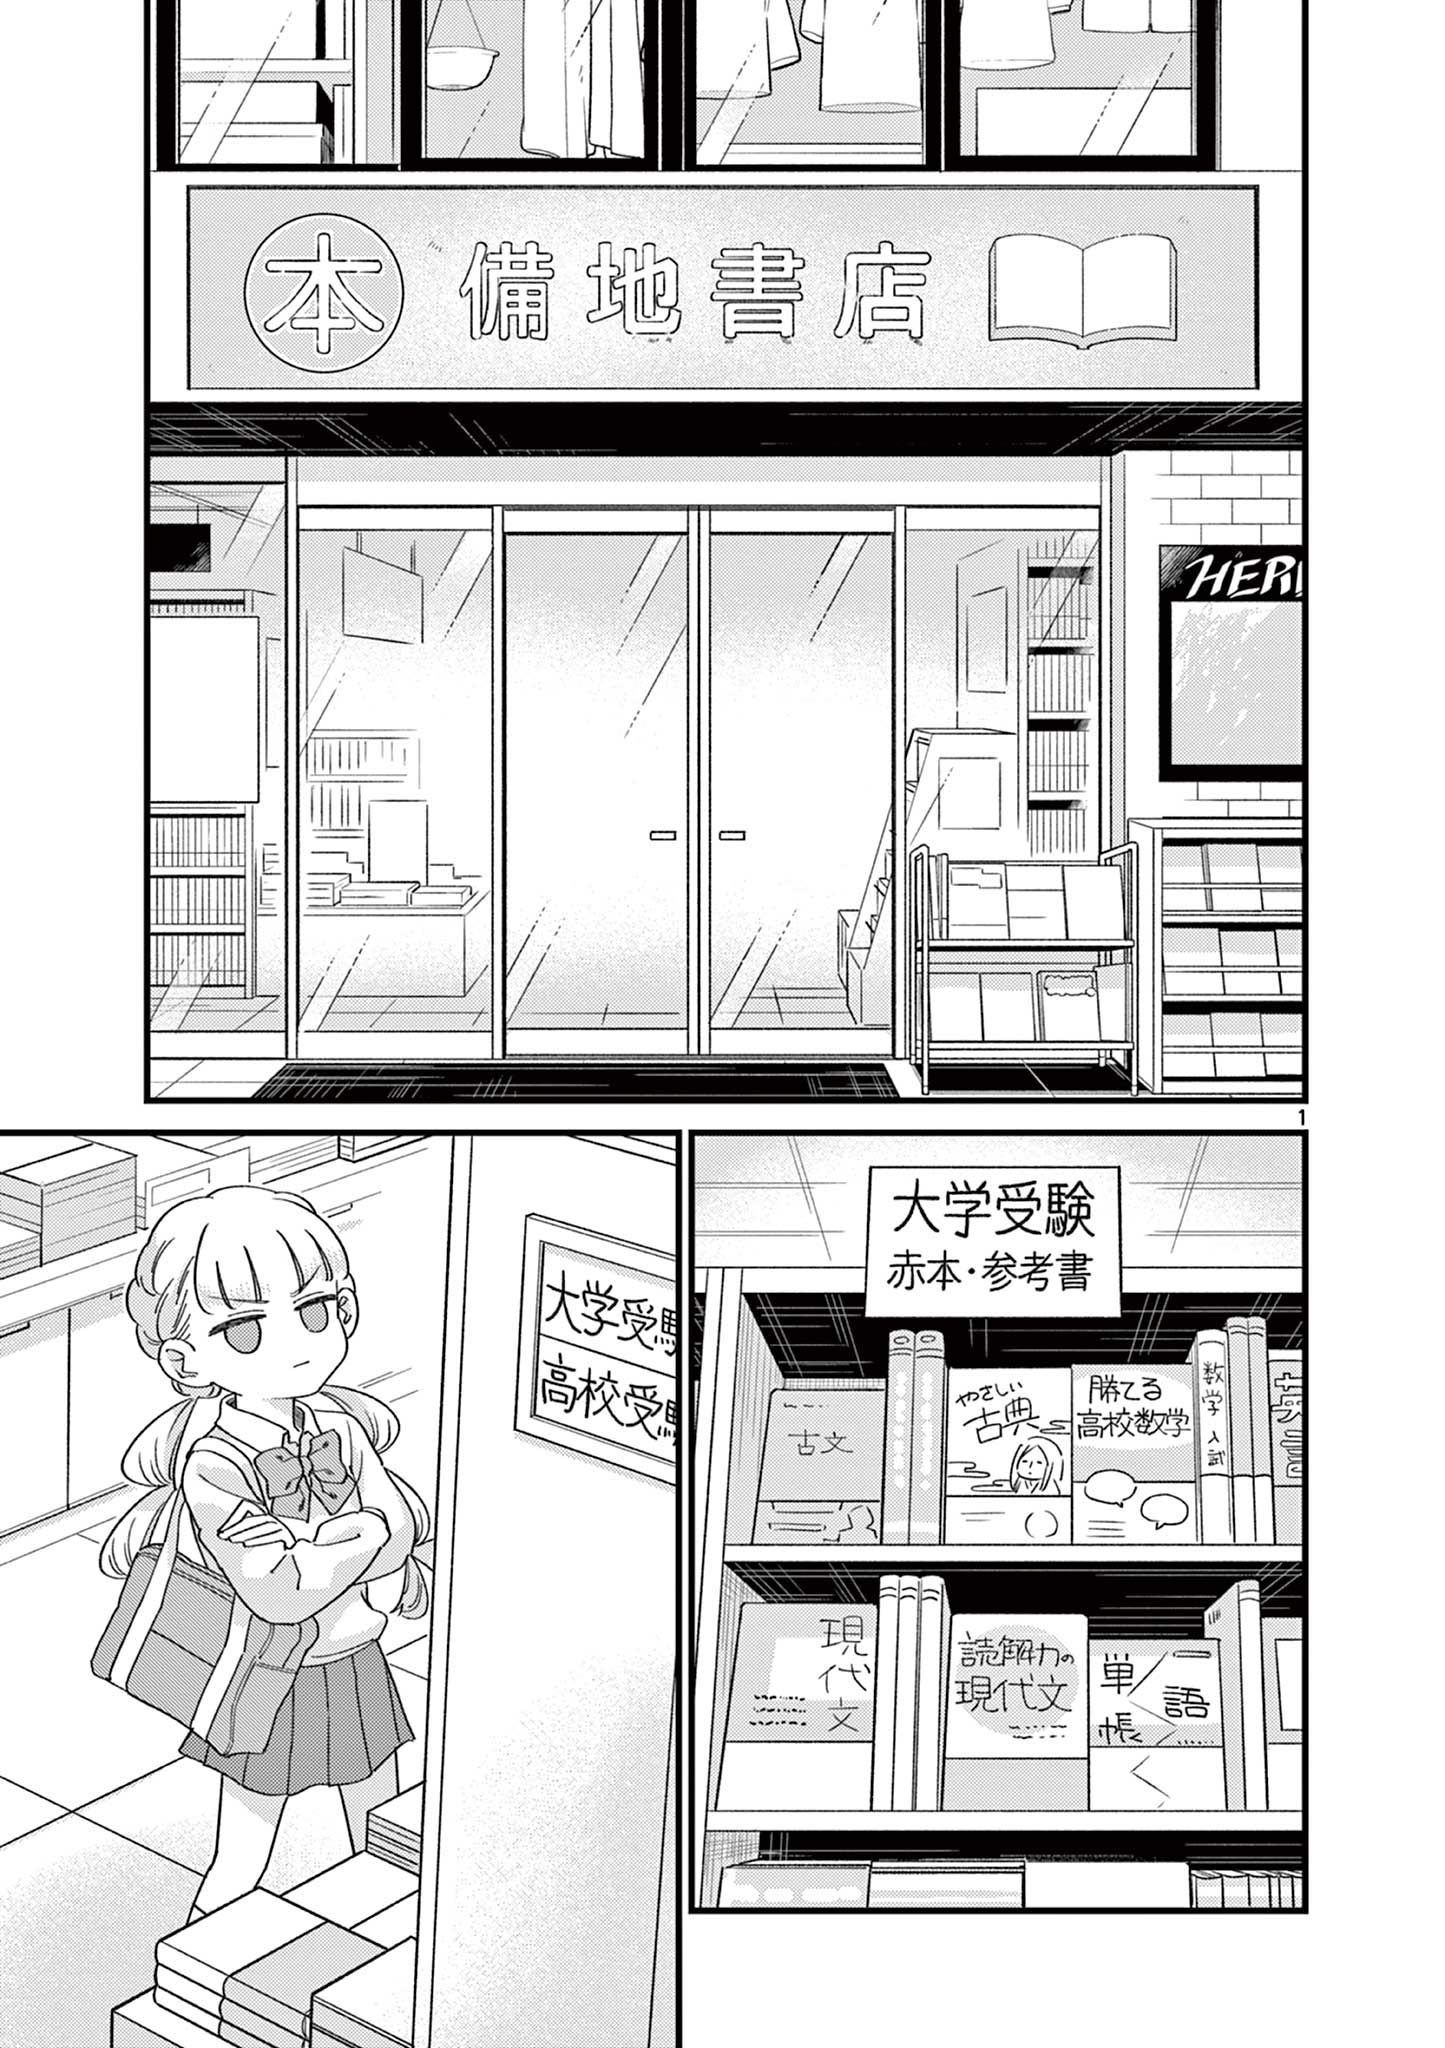 Ranka-chan wa Bitch ni Naritai - Chapter 23 - Page 1